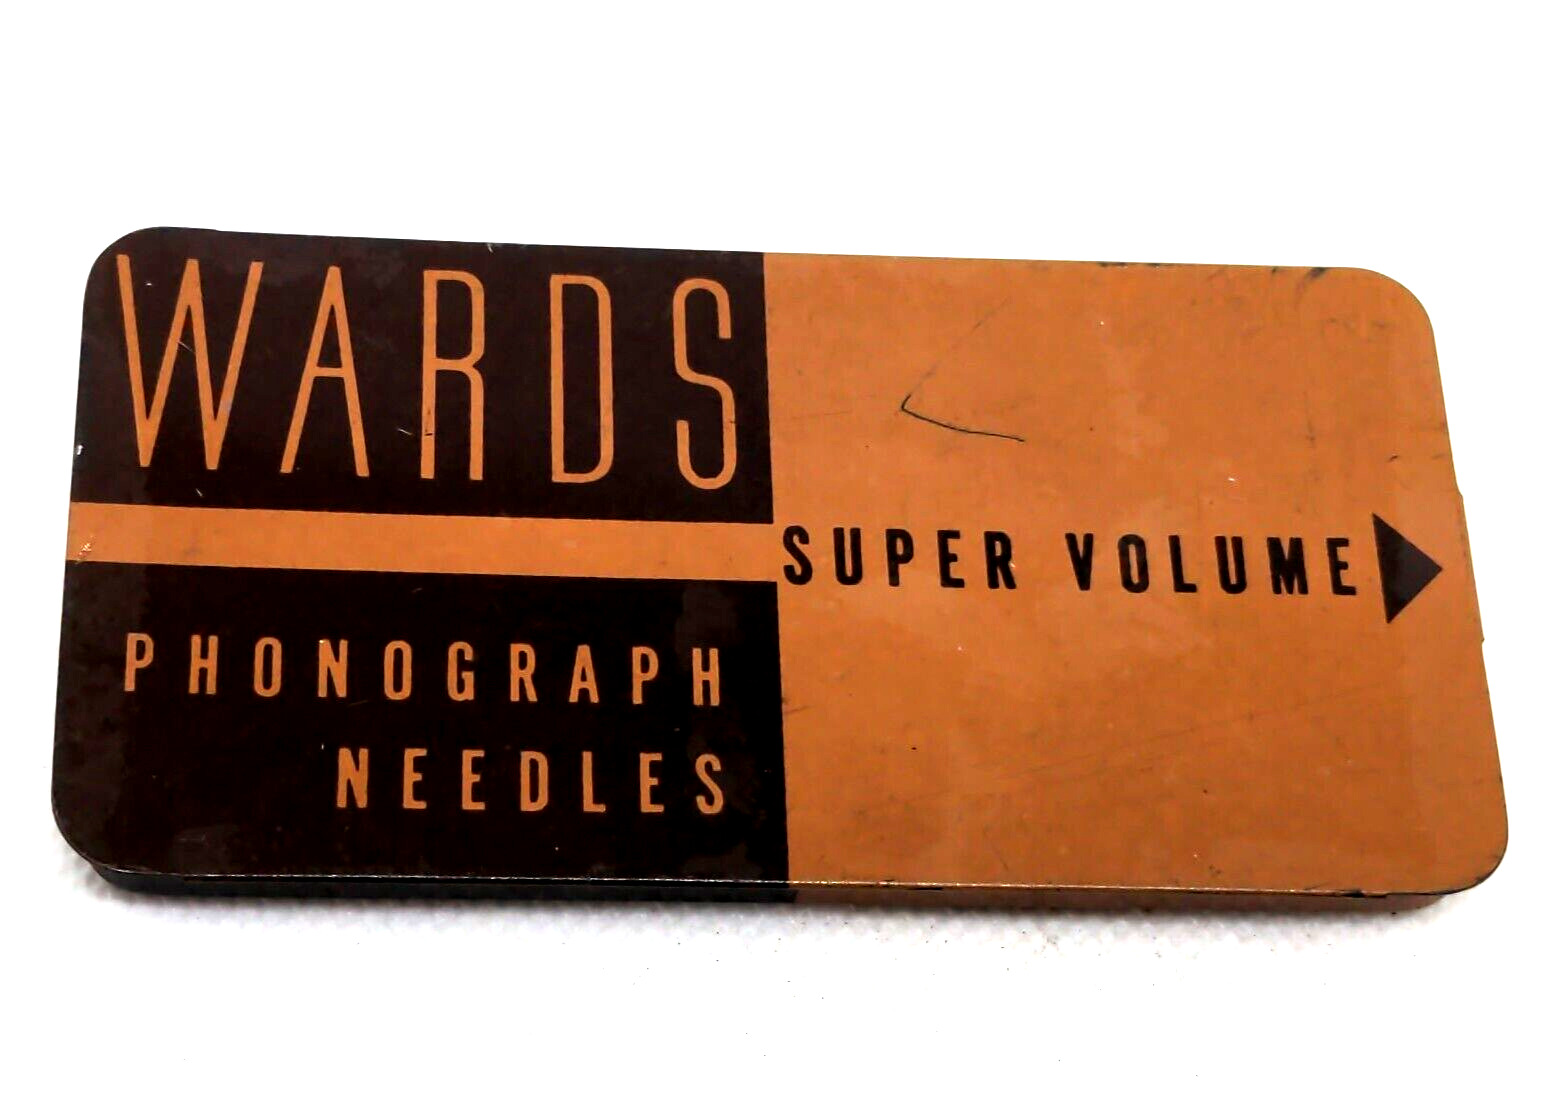 WARDS Super Volume 500 Phonograph Needles vintage tin No 2455 Montgomery Ward